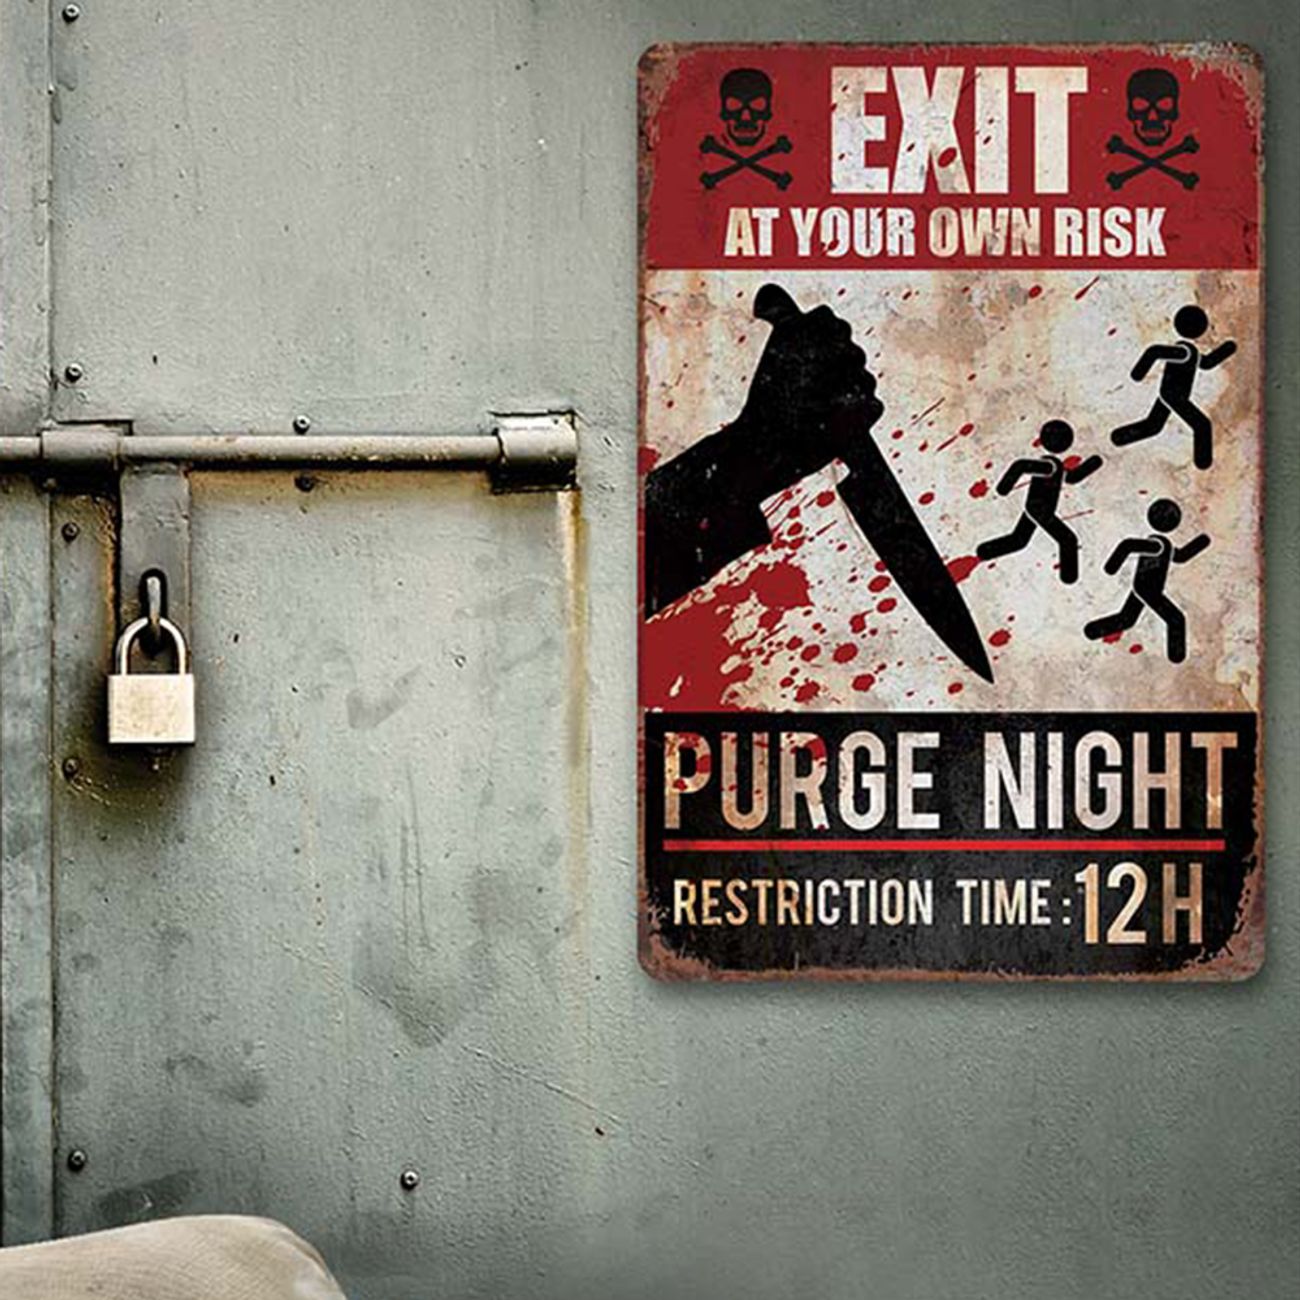 skylt-purge-night-89276-2